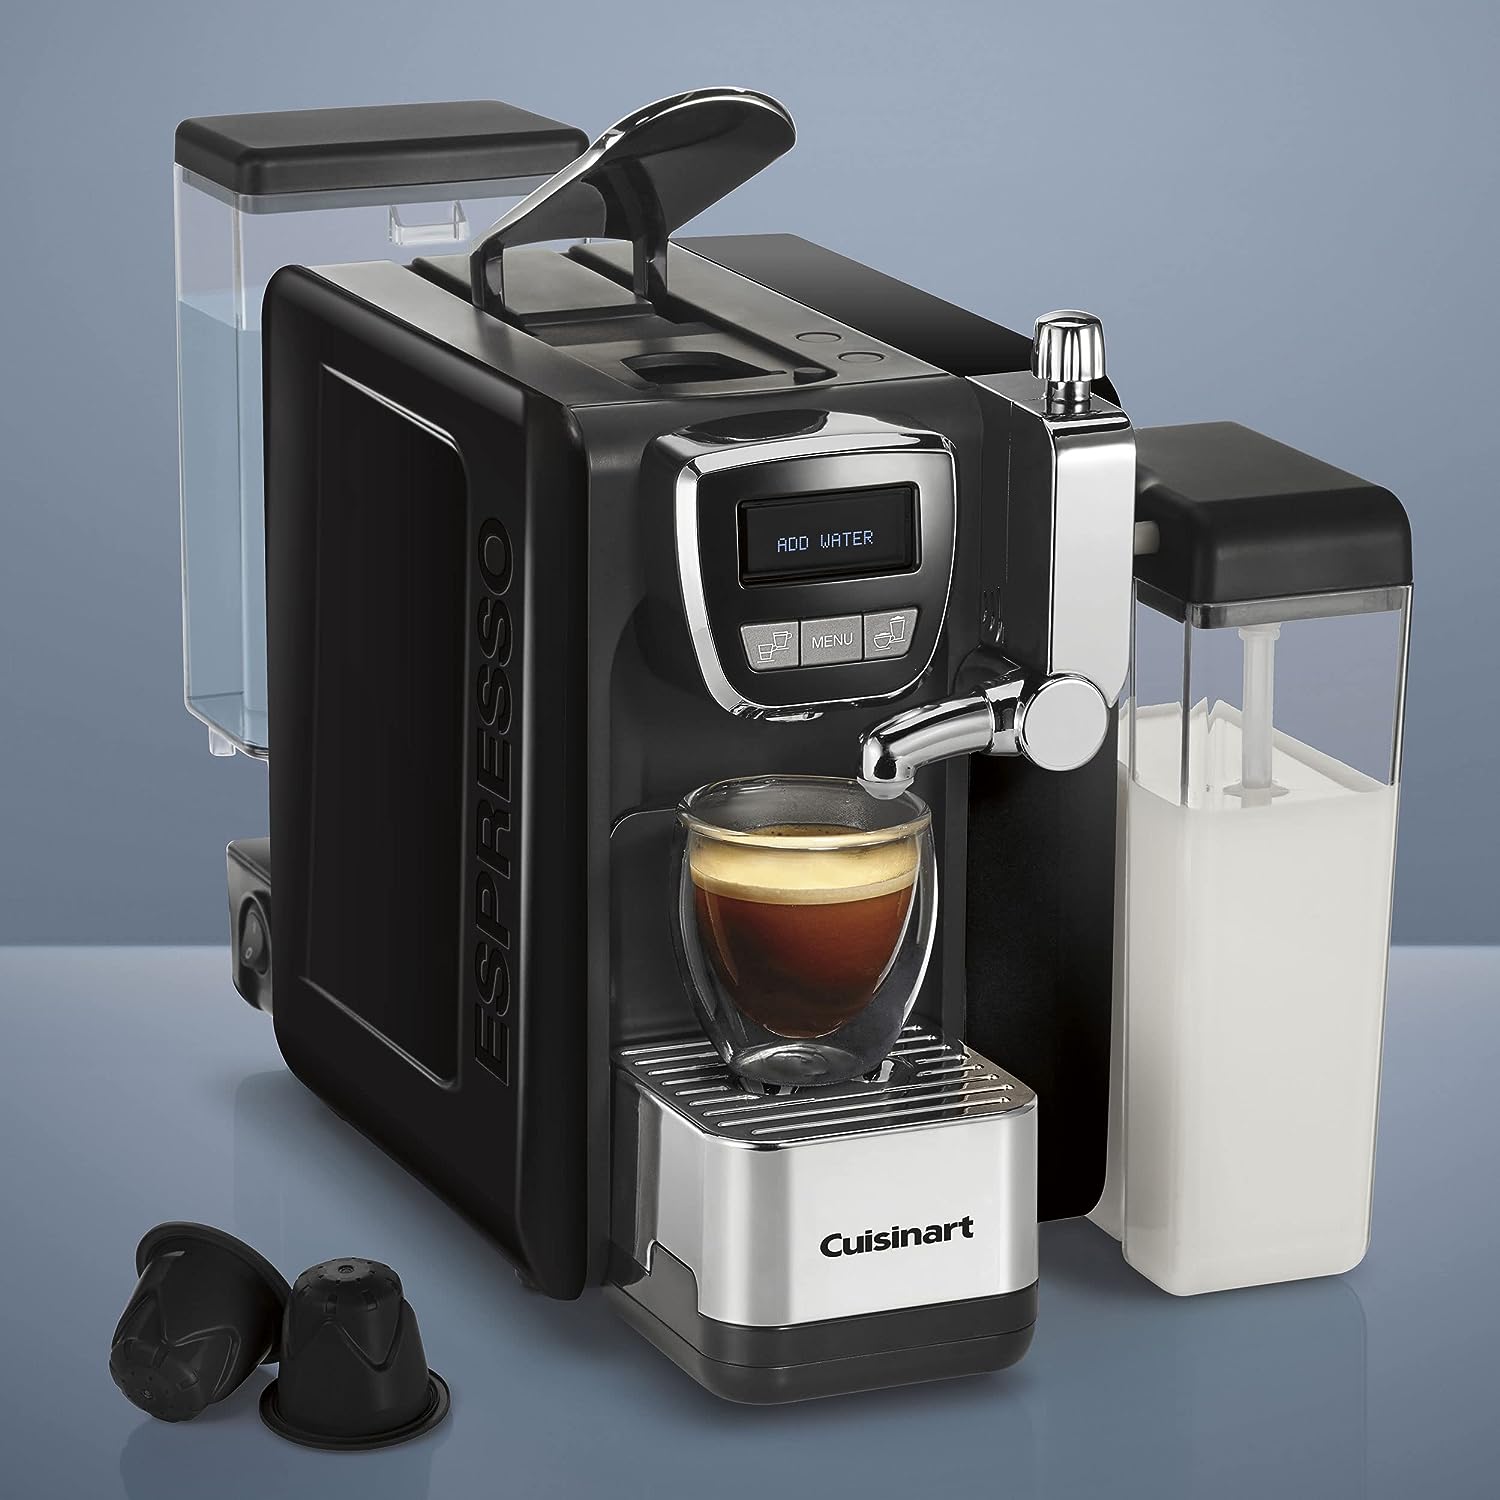 Cuisinart Espresso Machine Review